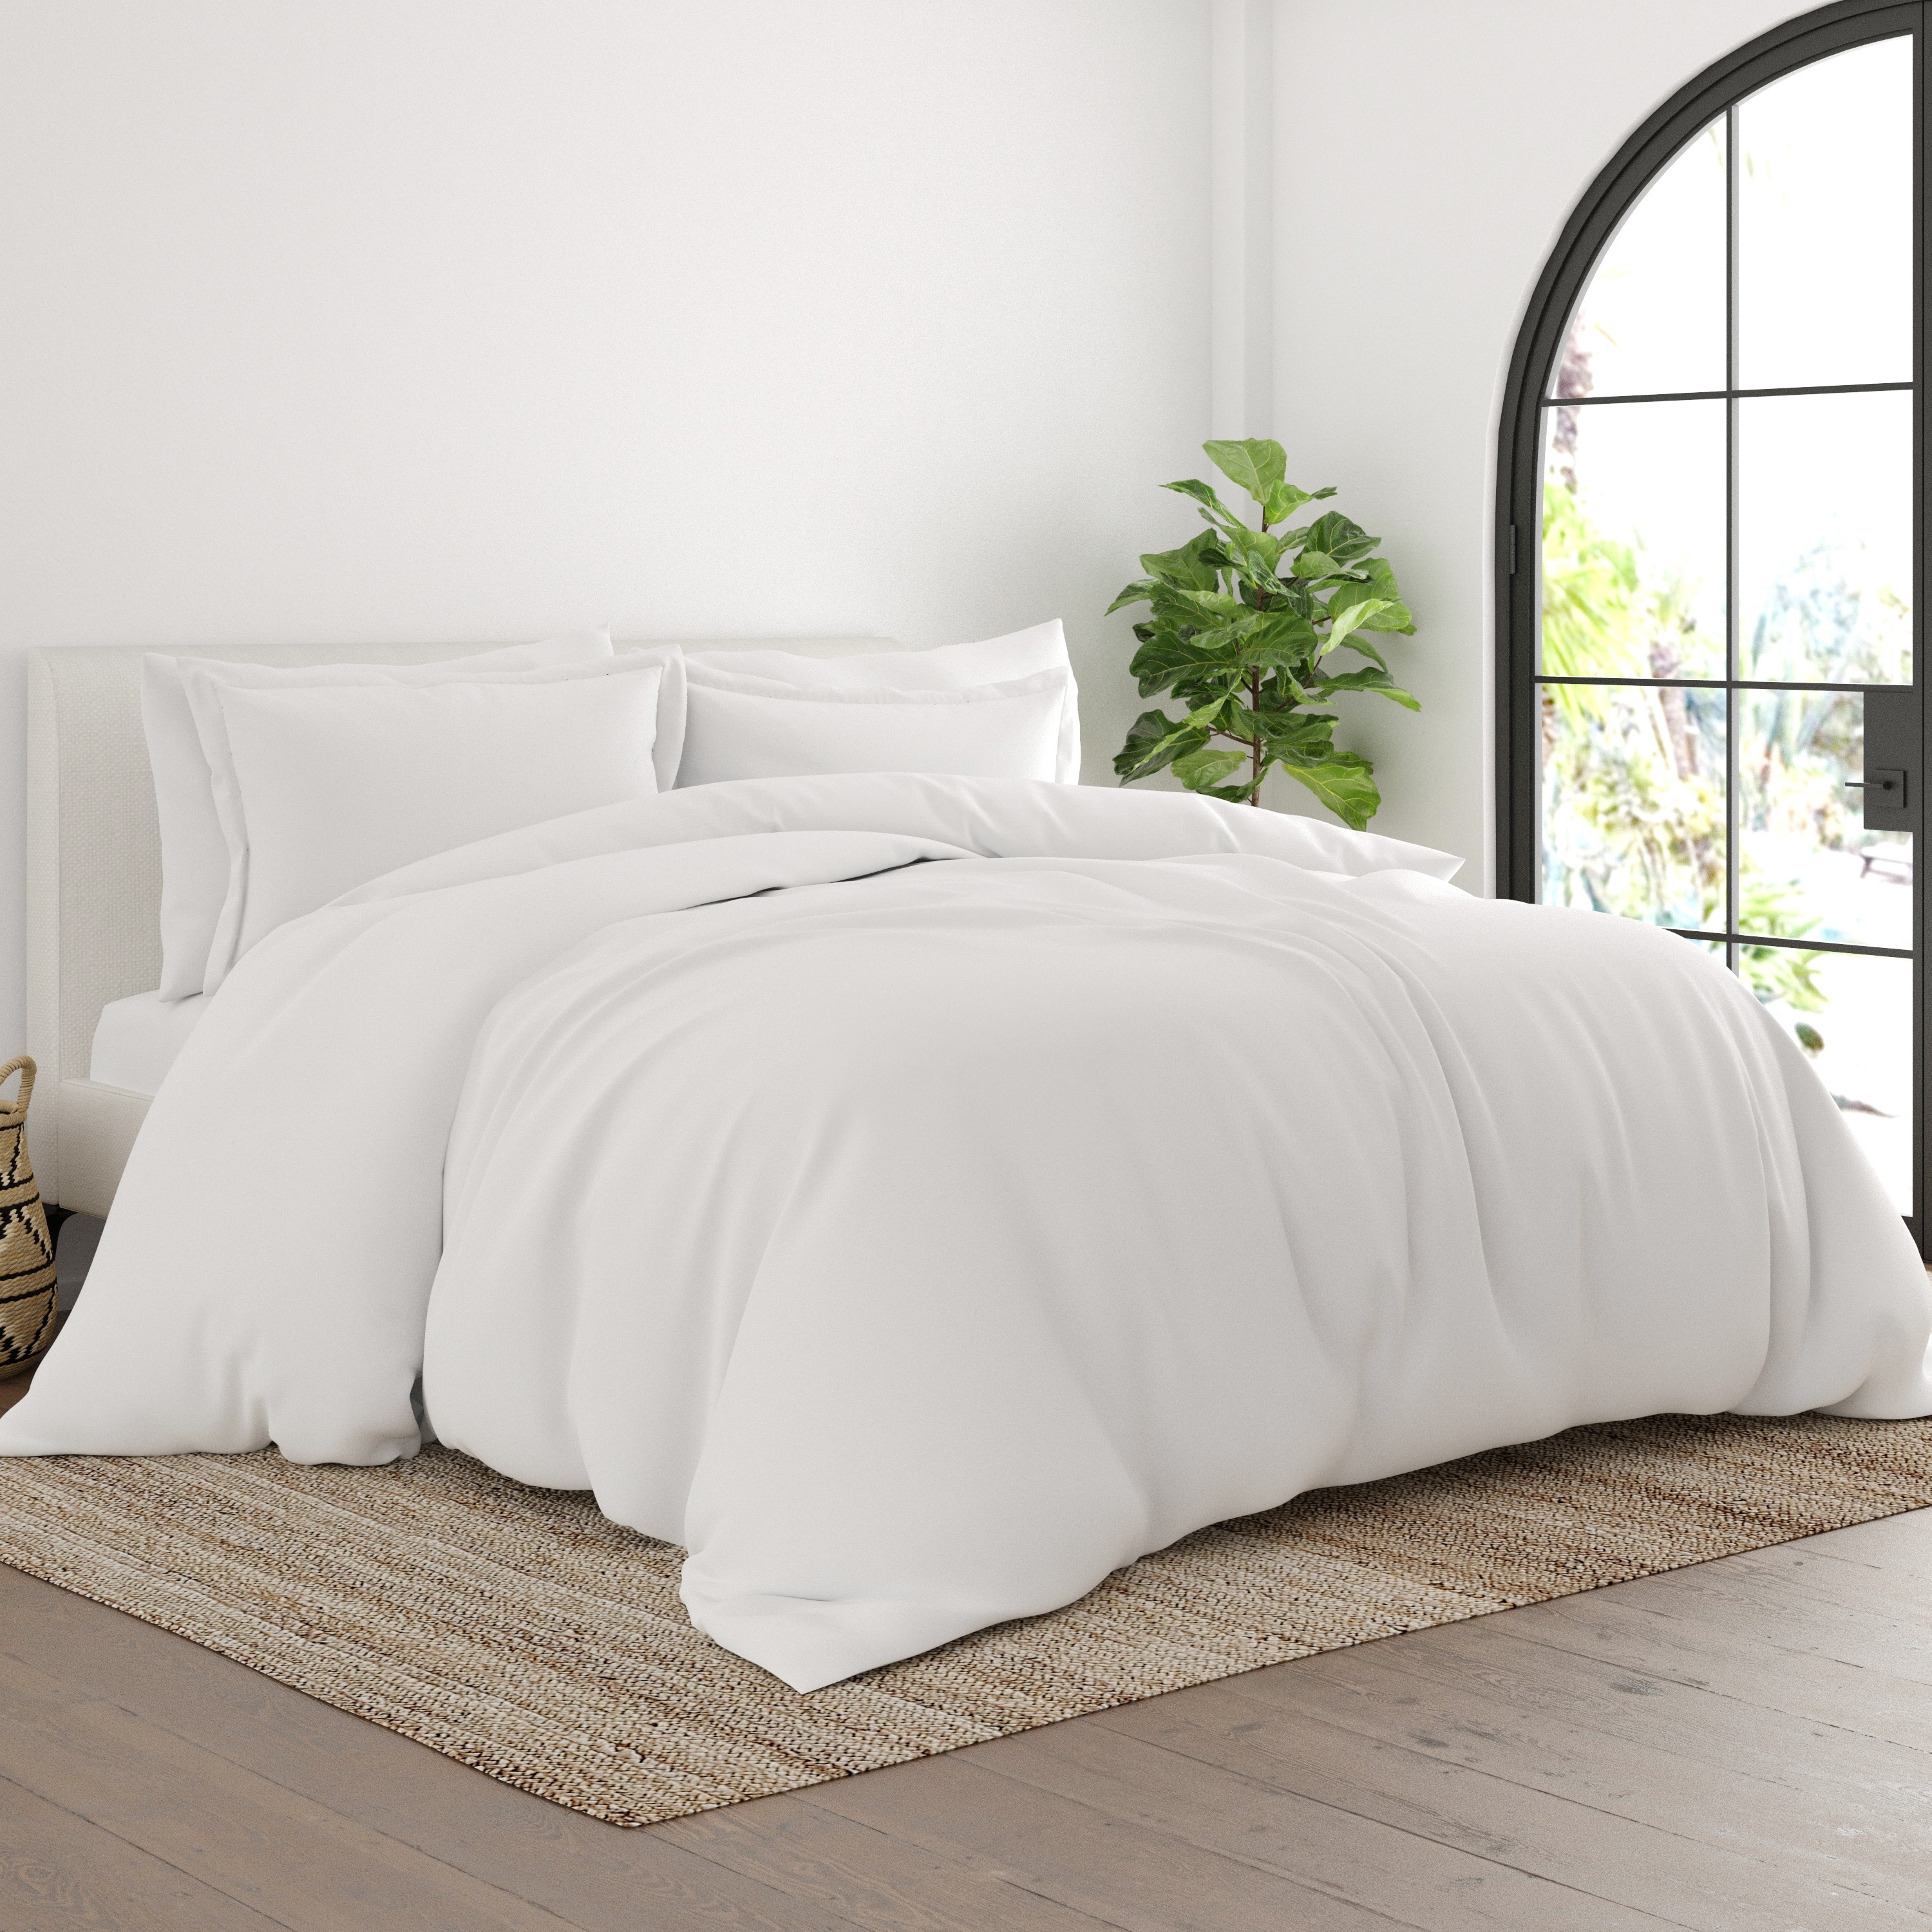 5%off Brushed Cotton 4-in-1 Bedding Set Violet Twin Size Duvet Cover Bed  Sheet Bedding Set - China Designer Bedding Set and 4-in-1 Cotton Bedding Set  price